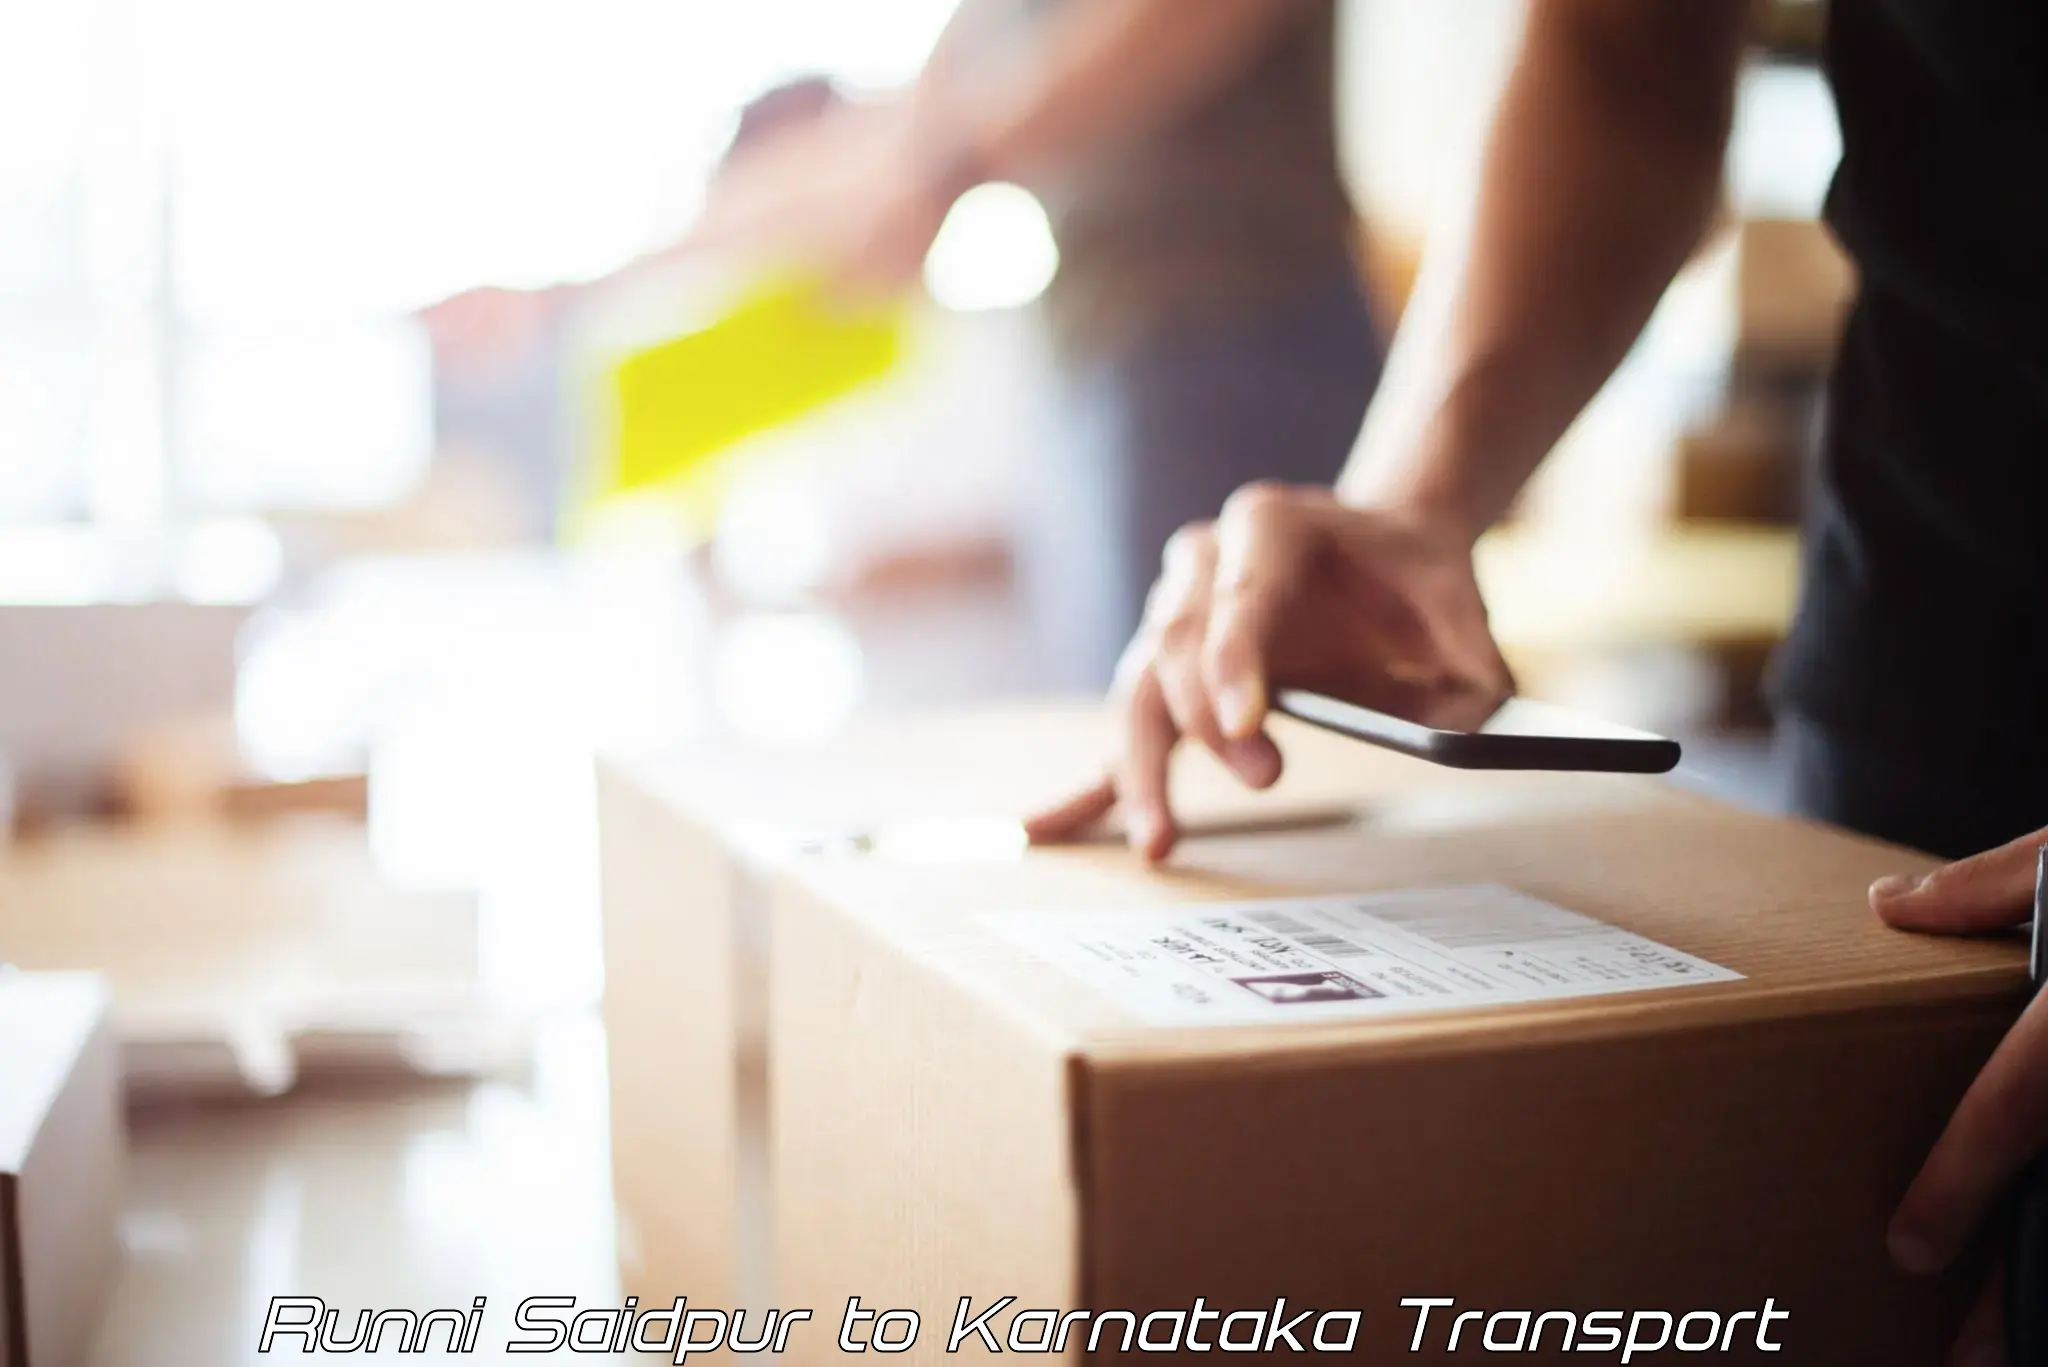 Goods delivery service Runni Saidpur to Dakshina Kannada